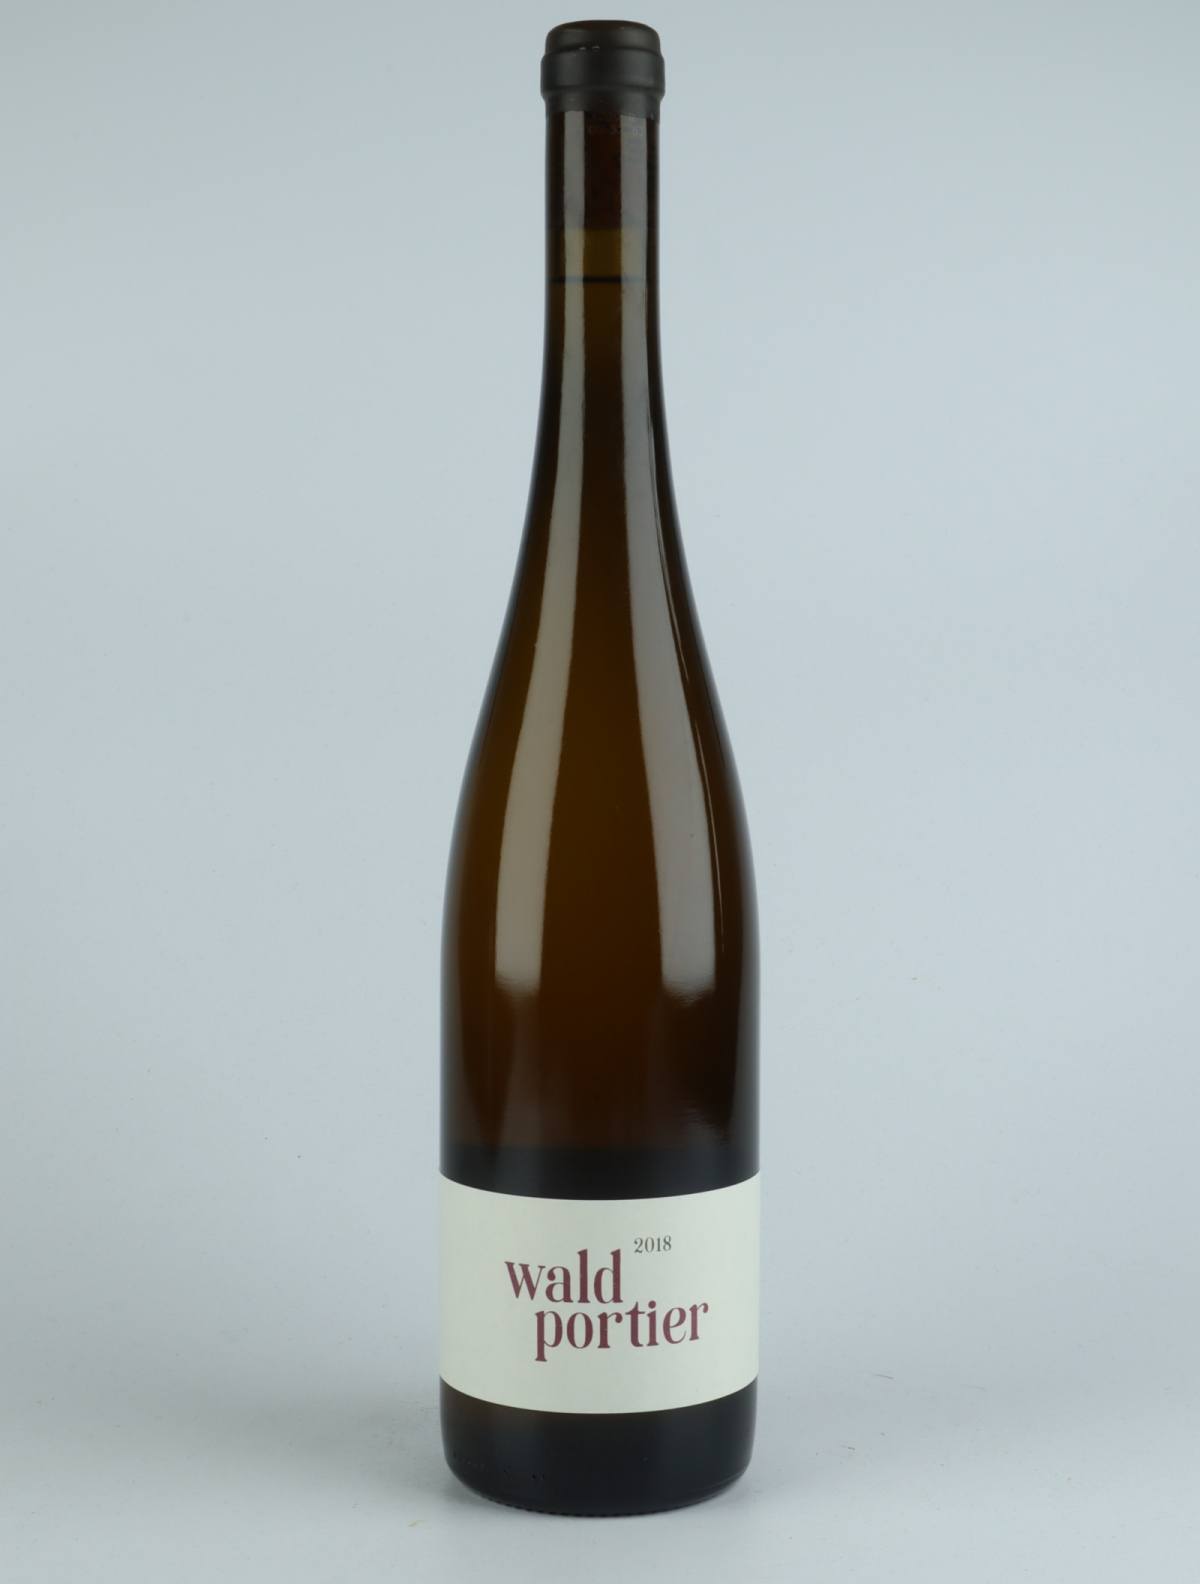 A bottle 2018 Waldportier White wine from Jakob Tennstedt, Mosel in Germany